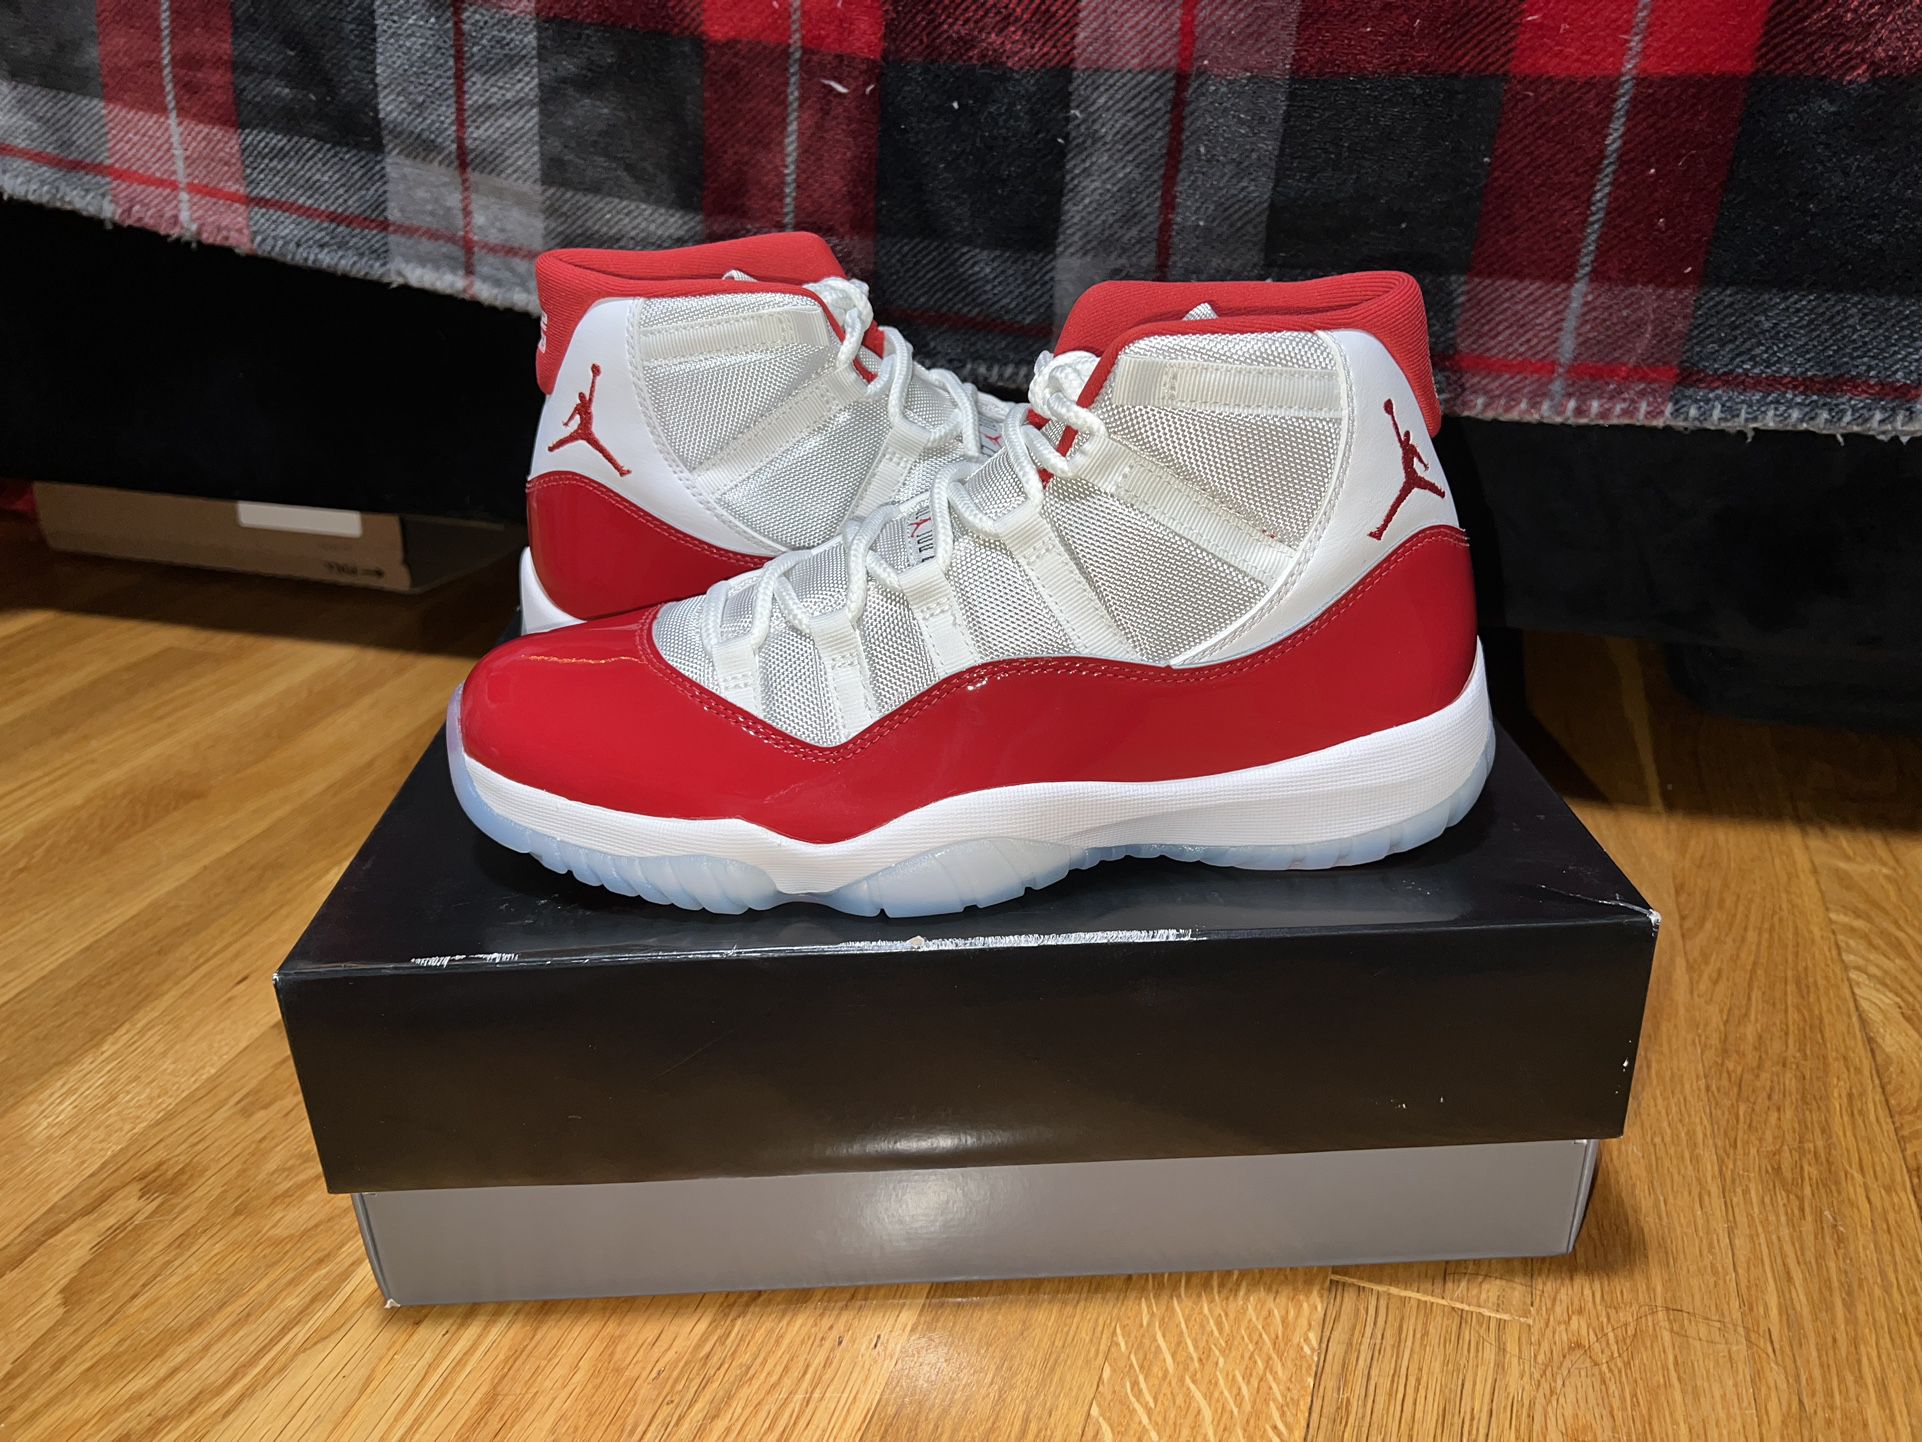 Jordan 11 Cherry Size 11.5